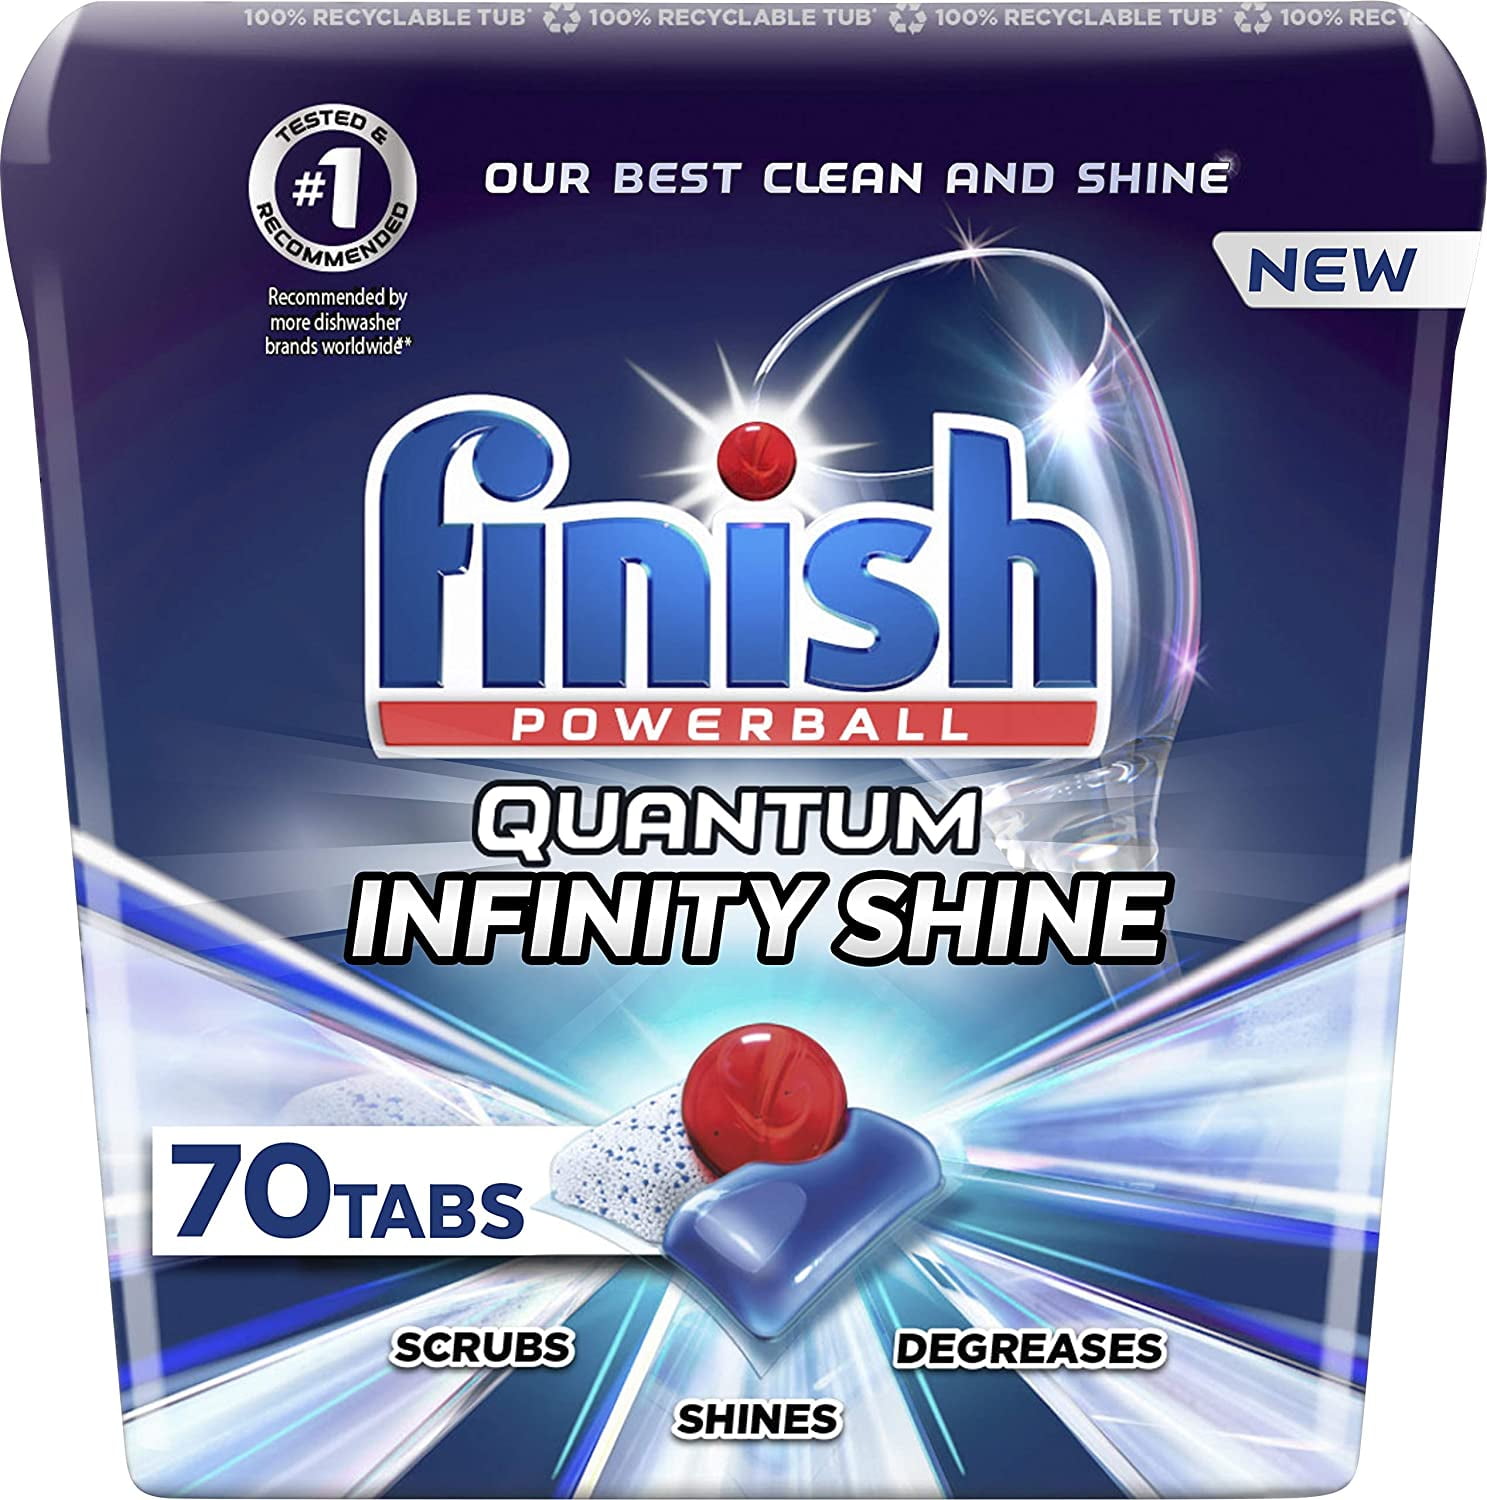 Finish Quantum Powerball Dishwasher Detergent Tablets (100 ct.)